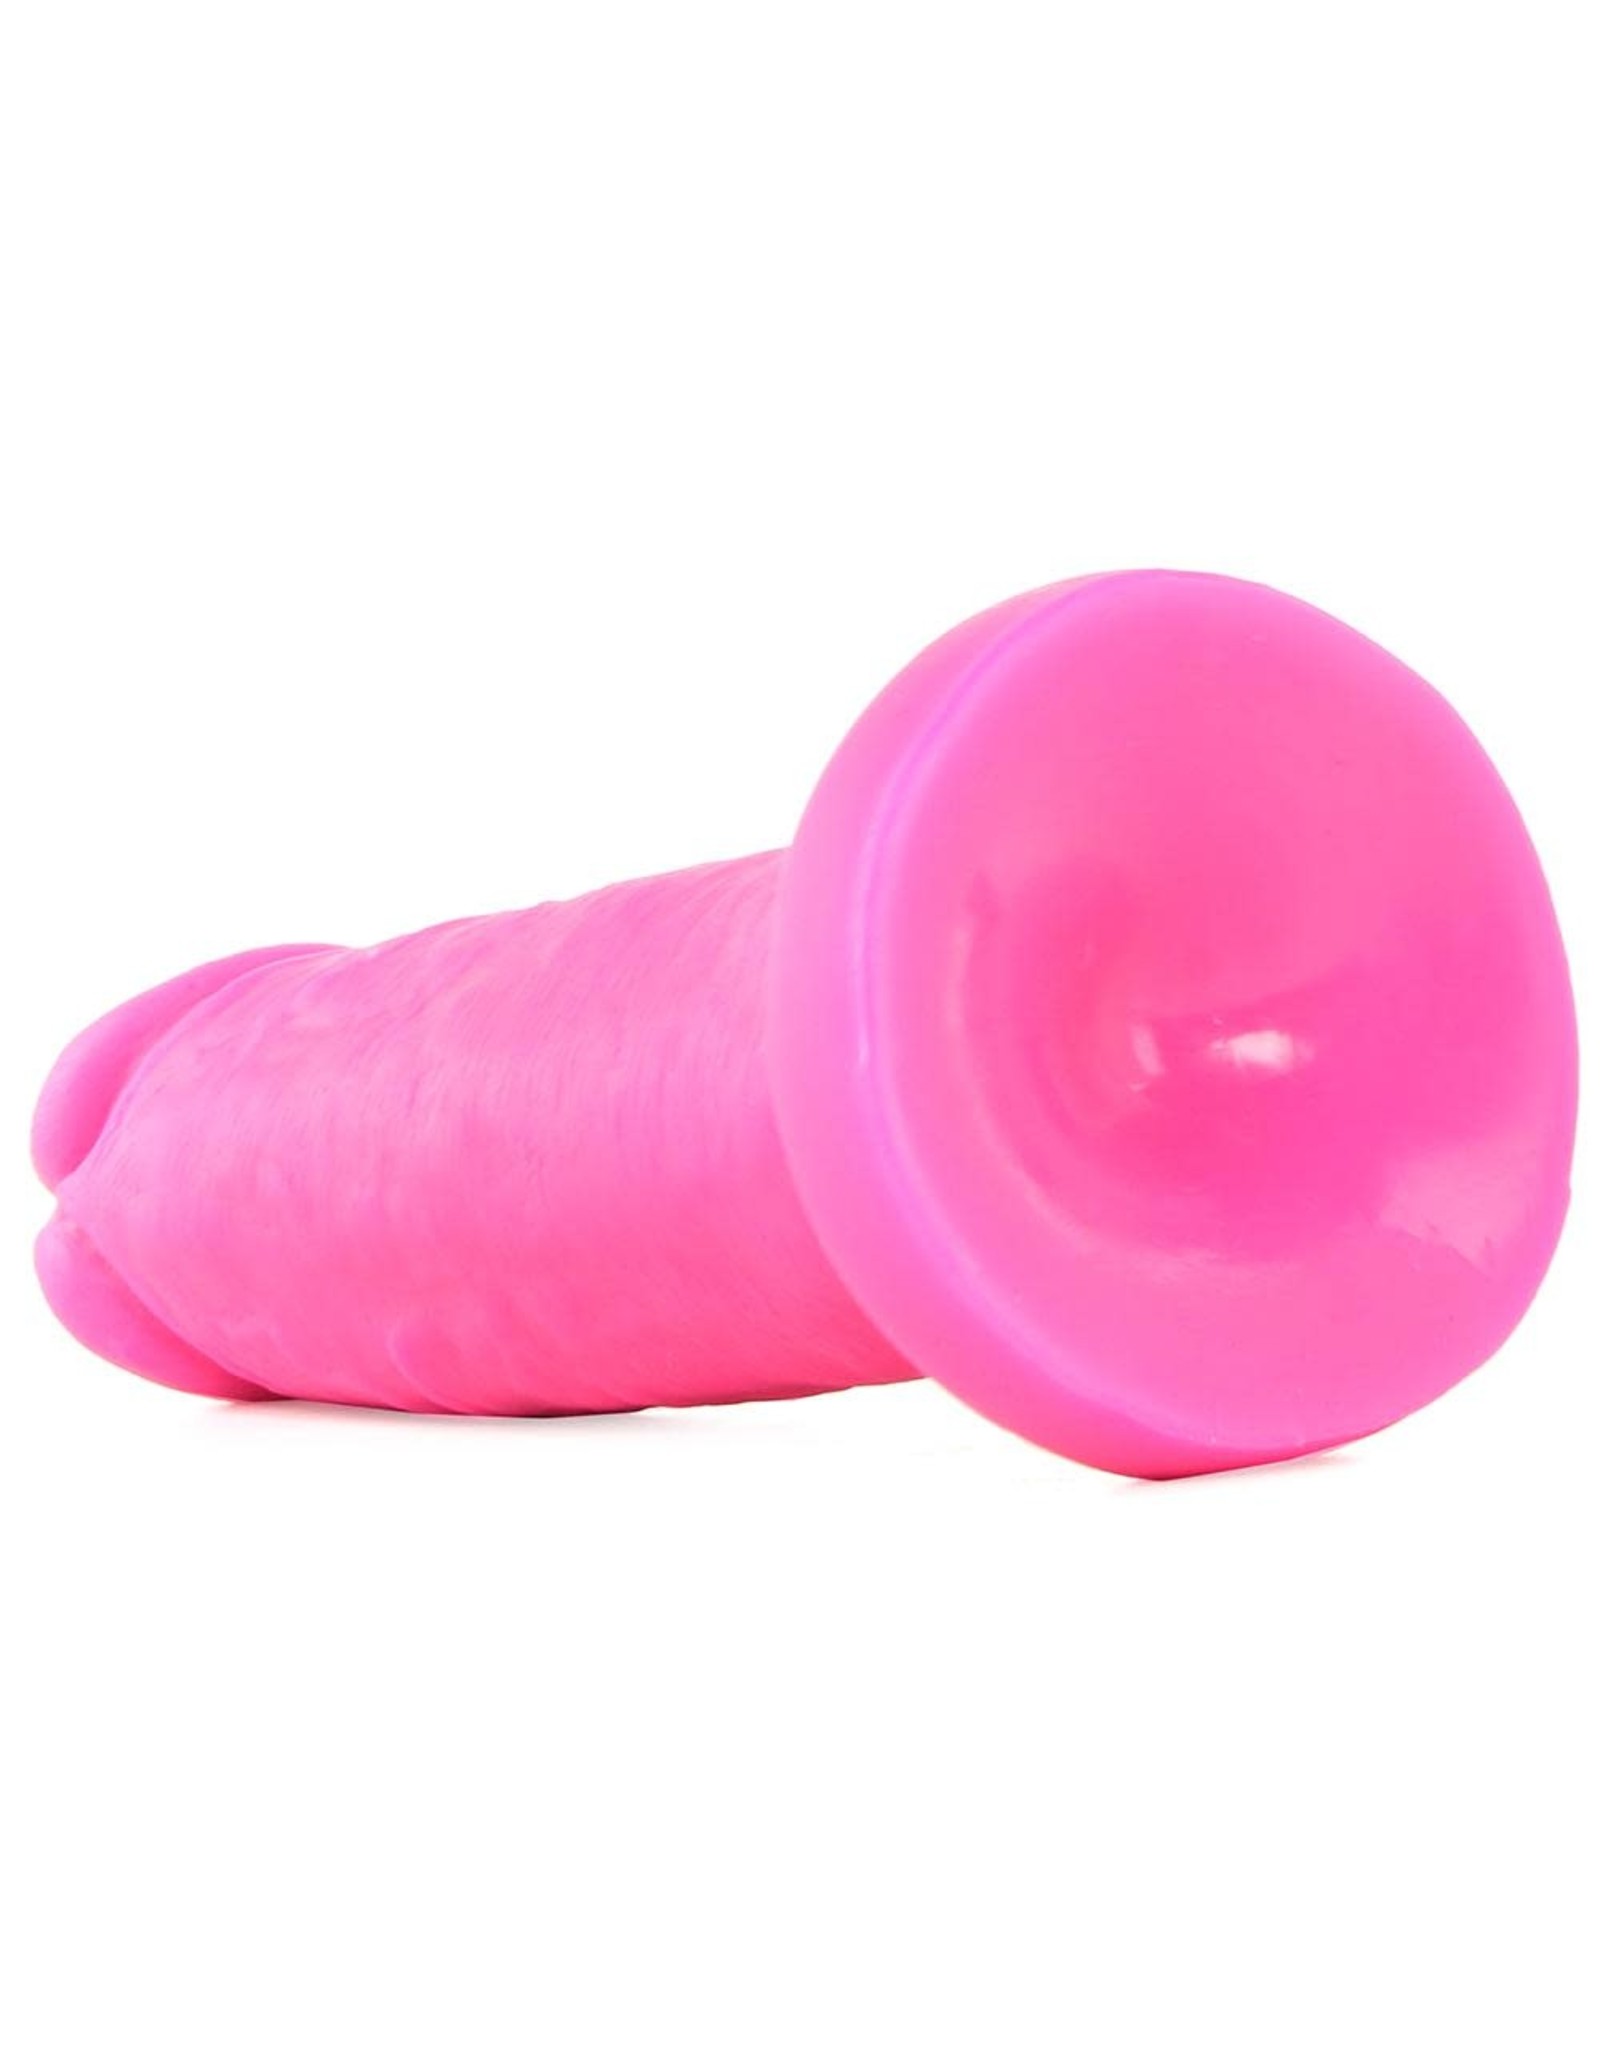 Pipedream Dillio - 6 Inch Chub - Pink